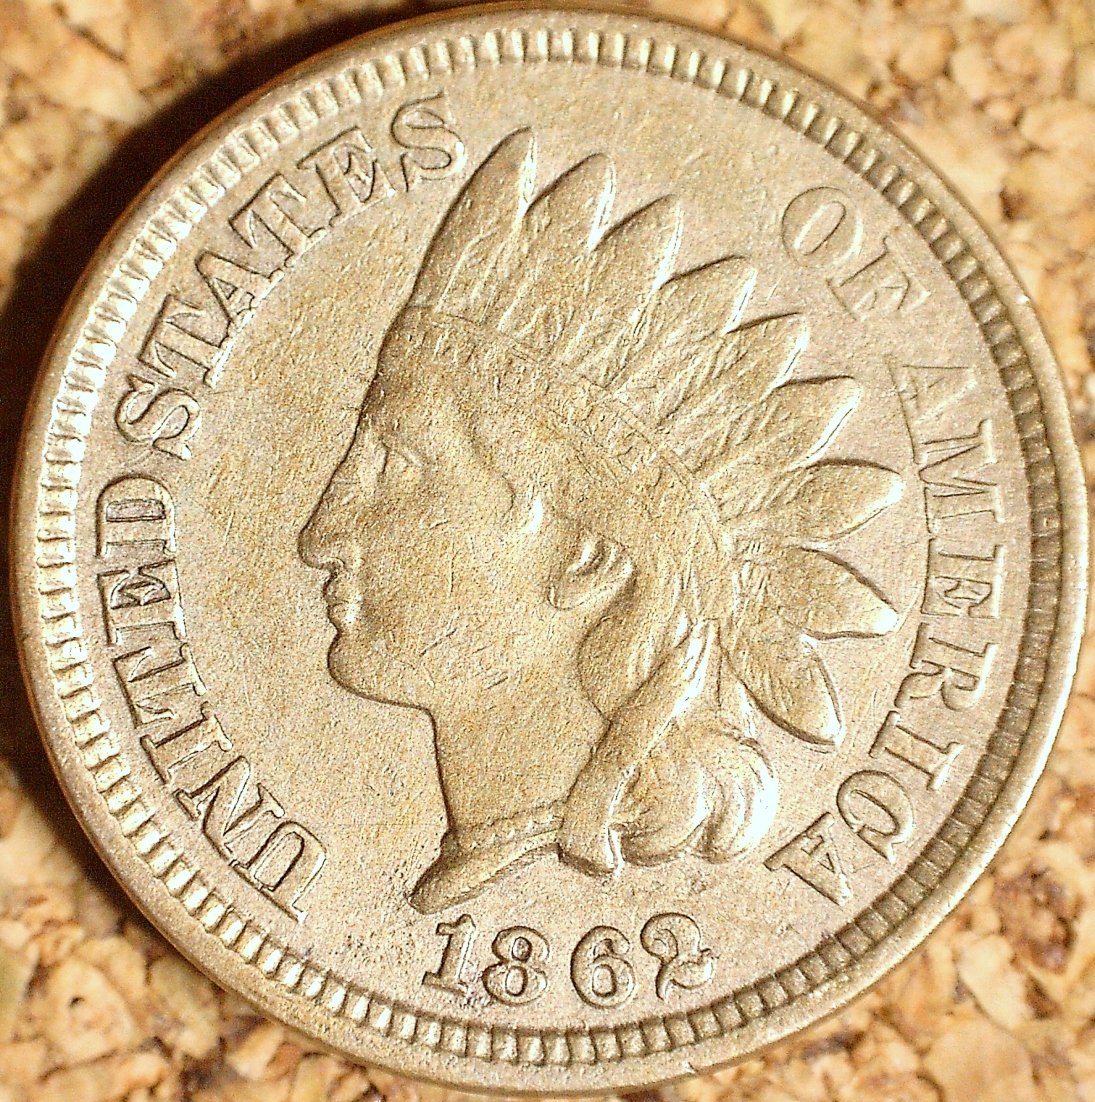 1862 PUN-001 - Indian Head Penny - Photo by David Killough